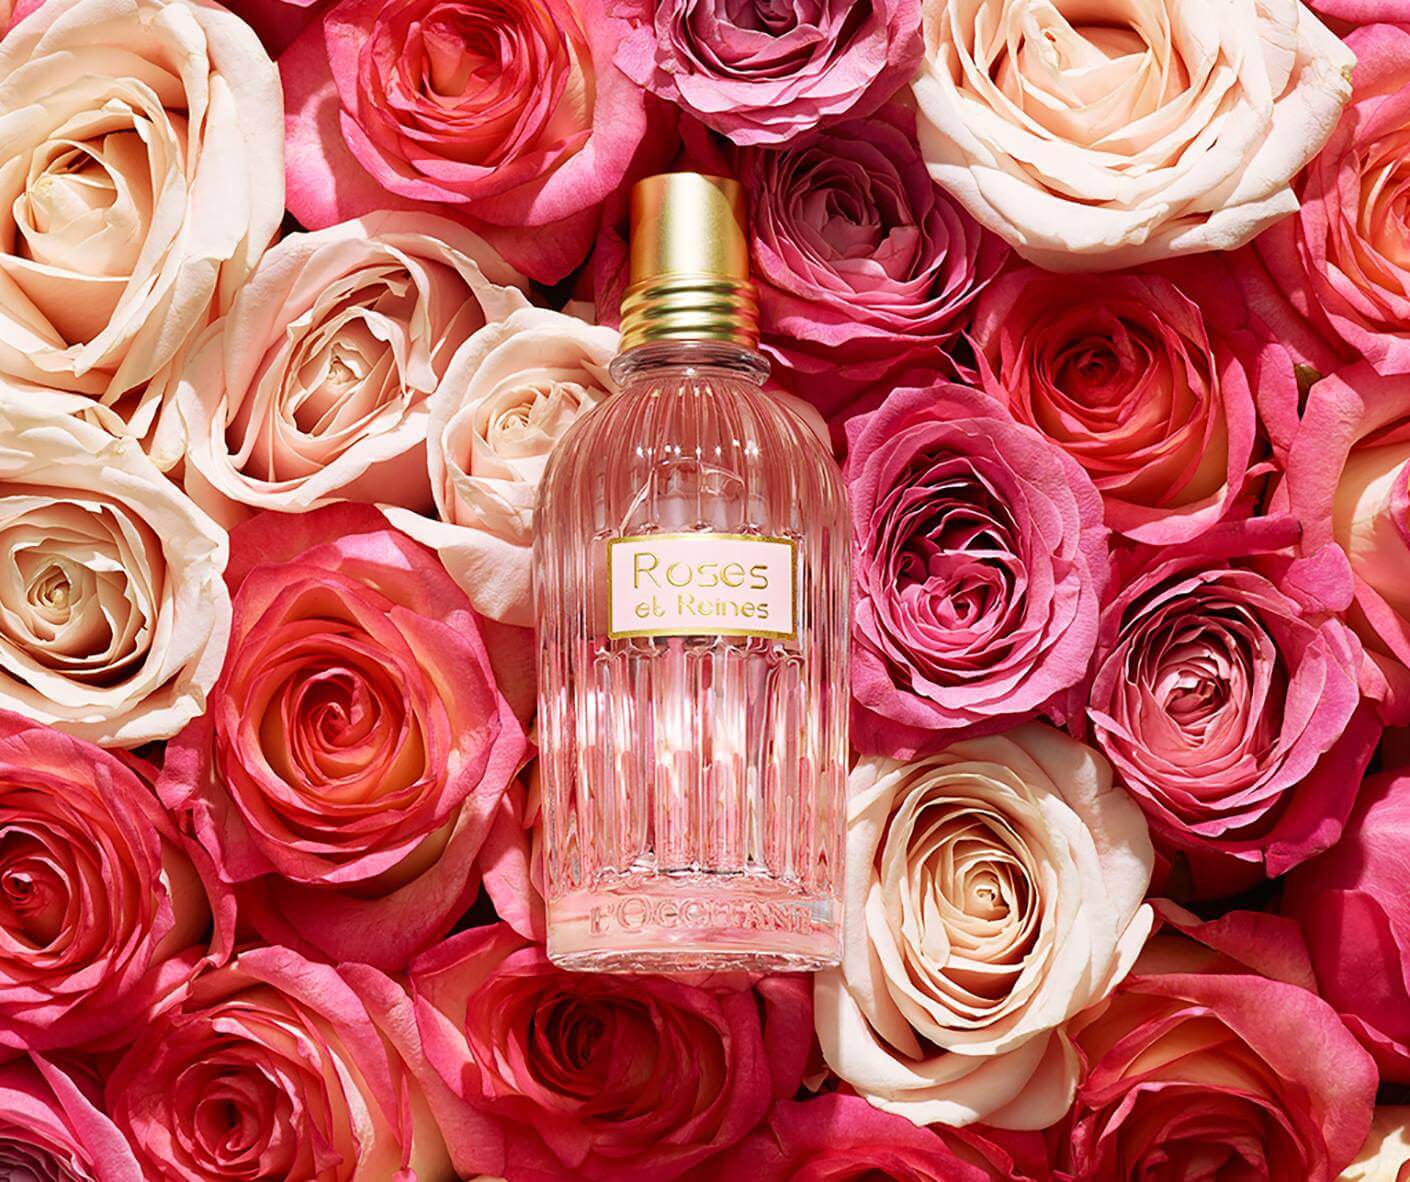 L'occitane Roses et Reines Eau De Toilette 7.5 ml น้ำหอมกลิ่นกุหลาบ ที่ให้ความรู้สึกเหมือนหญิงสาวผู้อ่อนโยน หรูหรา และทันสมัย แนวกรีนฟรุตตี้ 